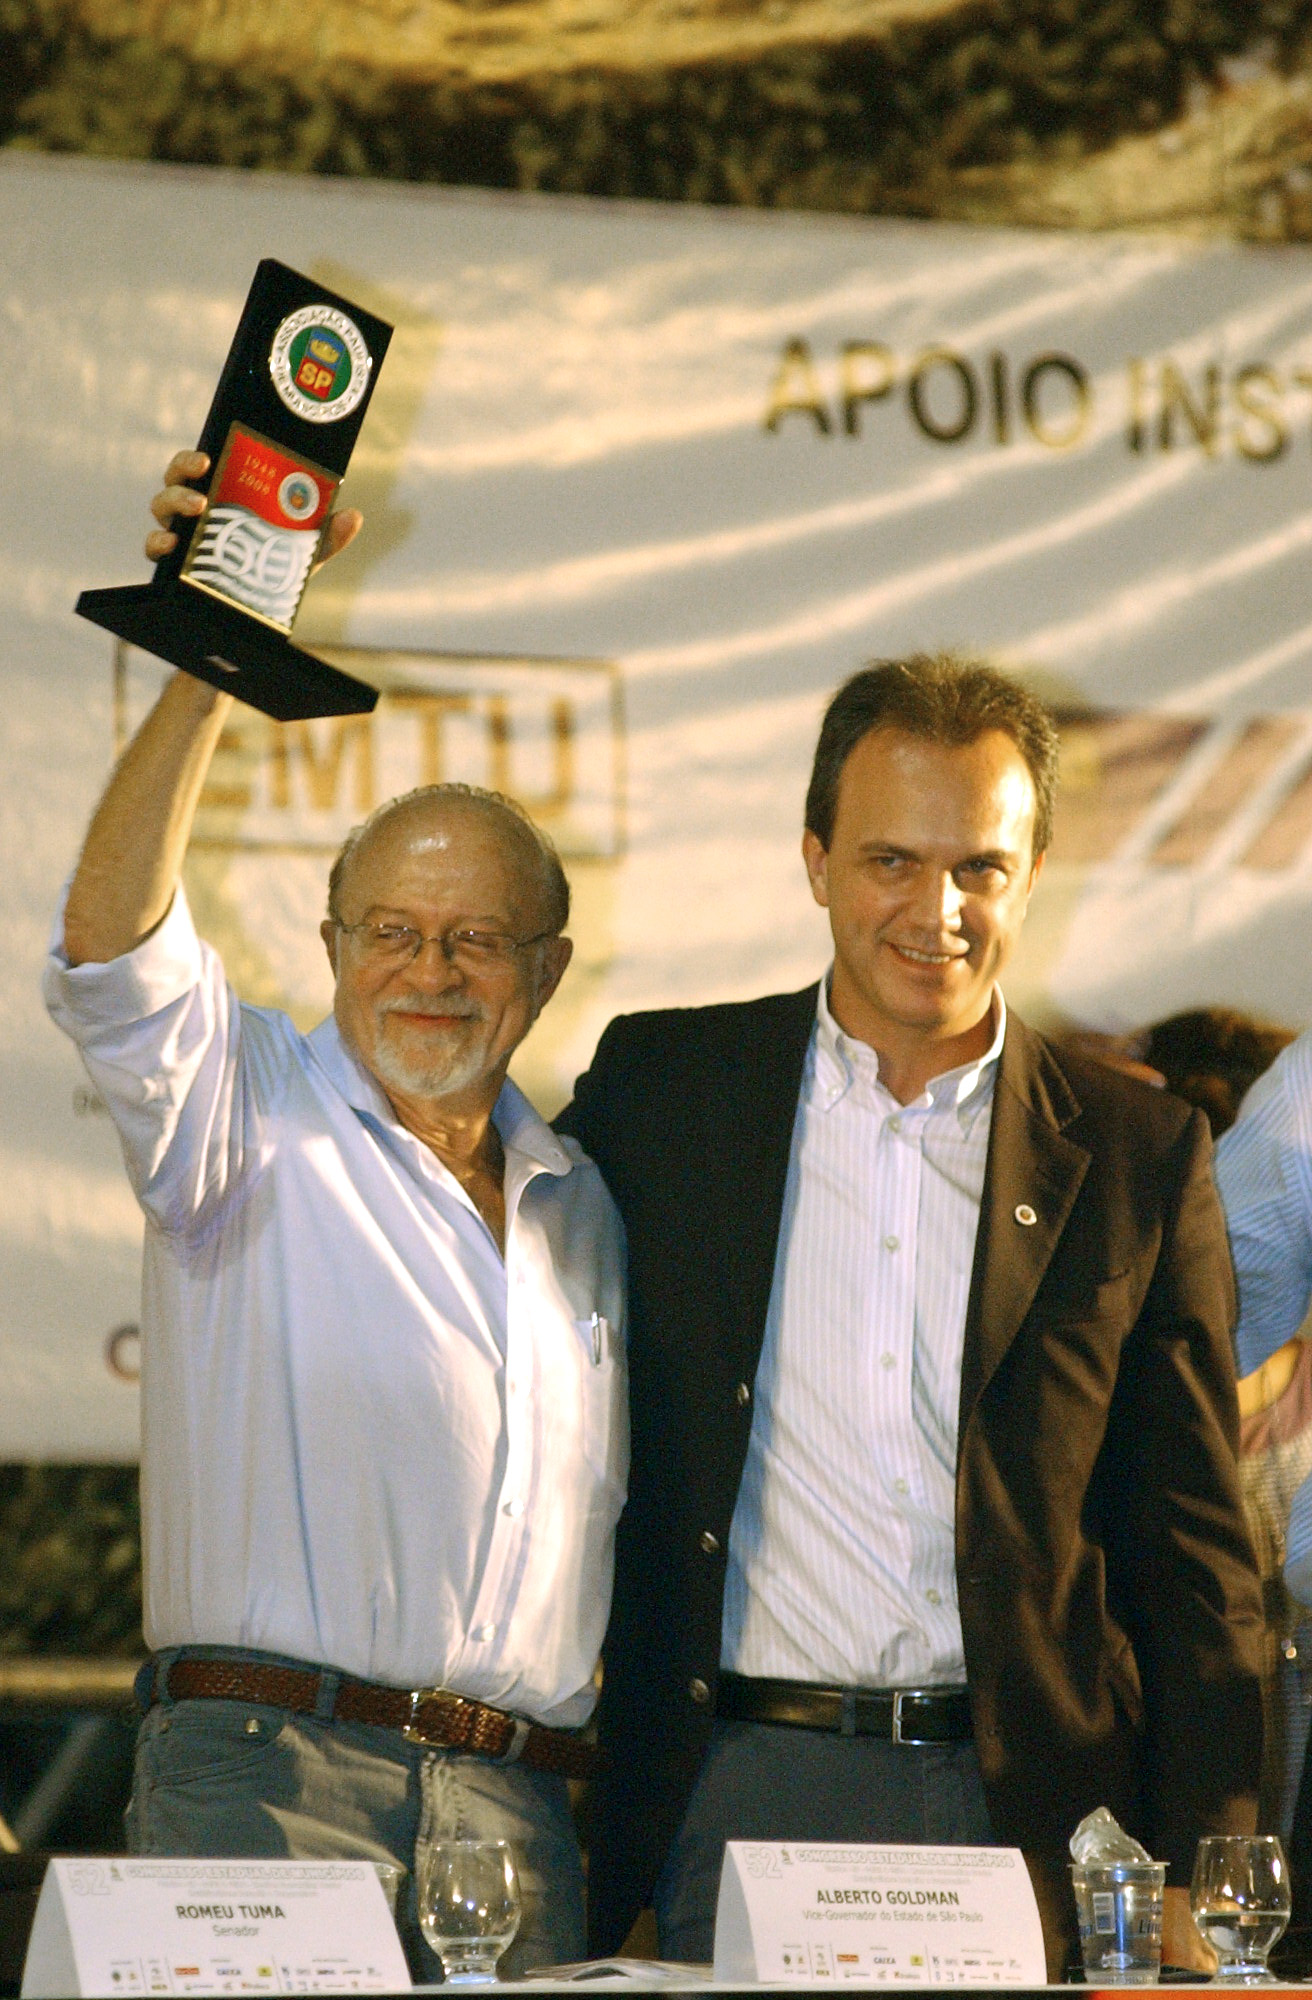 Marcos Monti entrega a Alberto Goldman Prmio da APM<a style='float:right;color:#ccc' href='https://www3.al.sp.gov.br/repositorio/noticia/04-2008/congresso 3a.jpg' target=_blank><i class='bi bi-zoom-in'></i> Clique para ver a imagem </a>